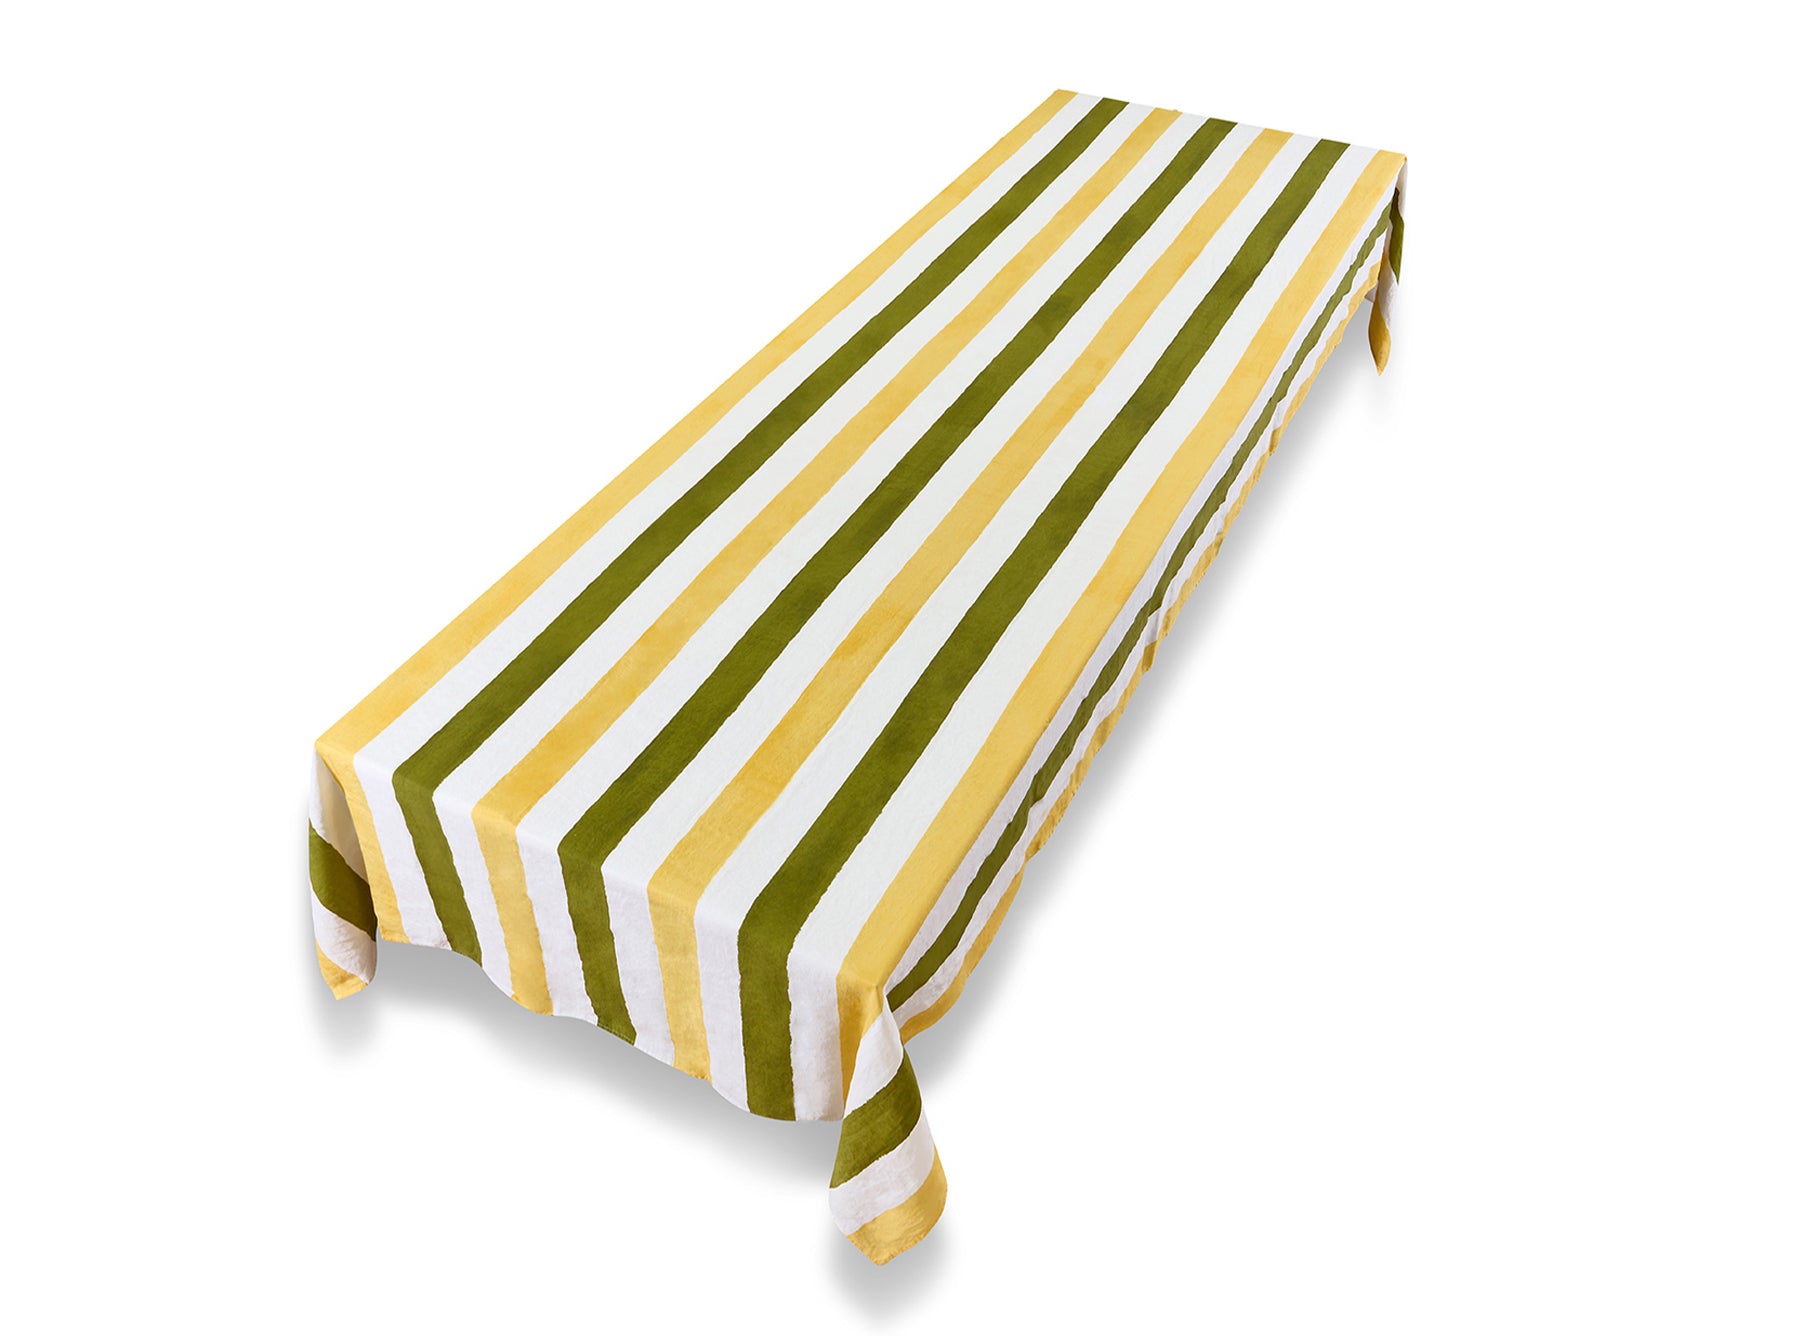 Stripe Linen Tablecloth in Avocado Green & Lemon Yellow